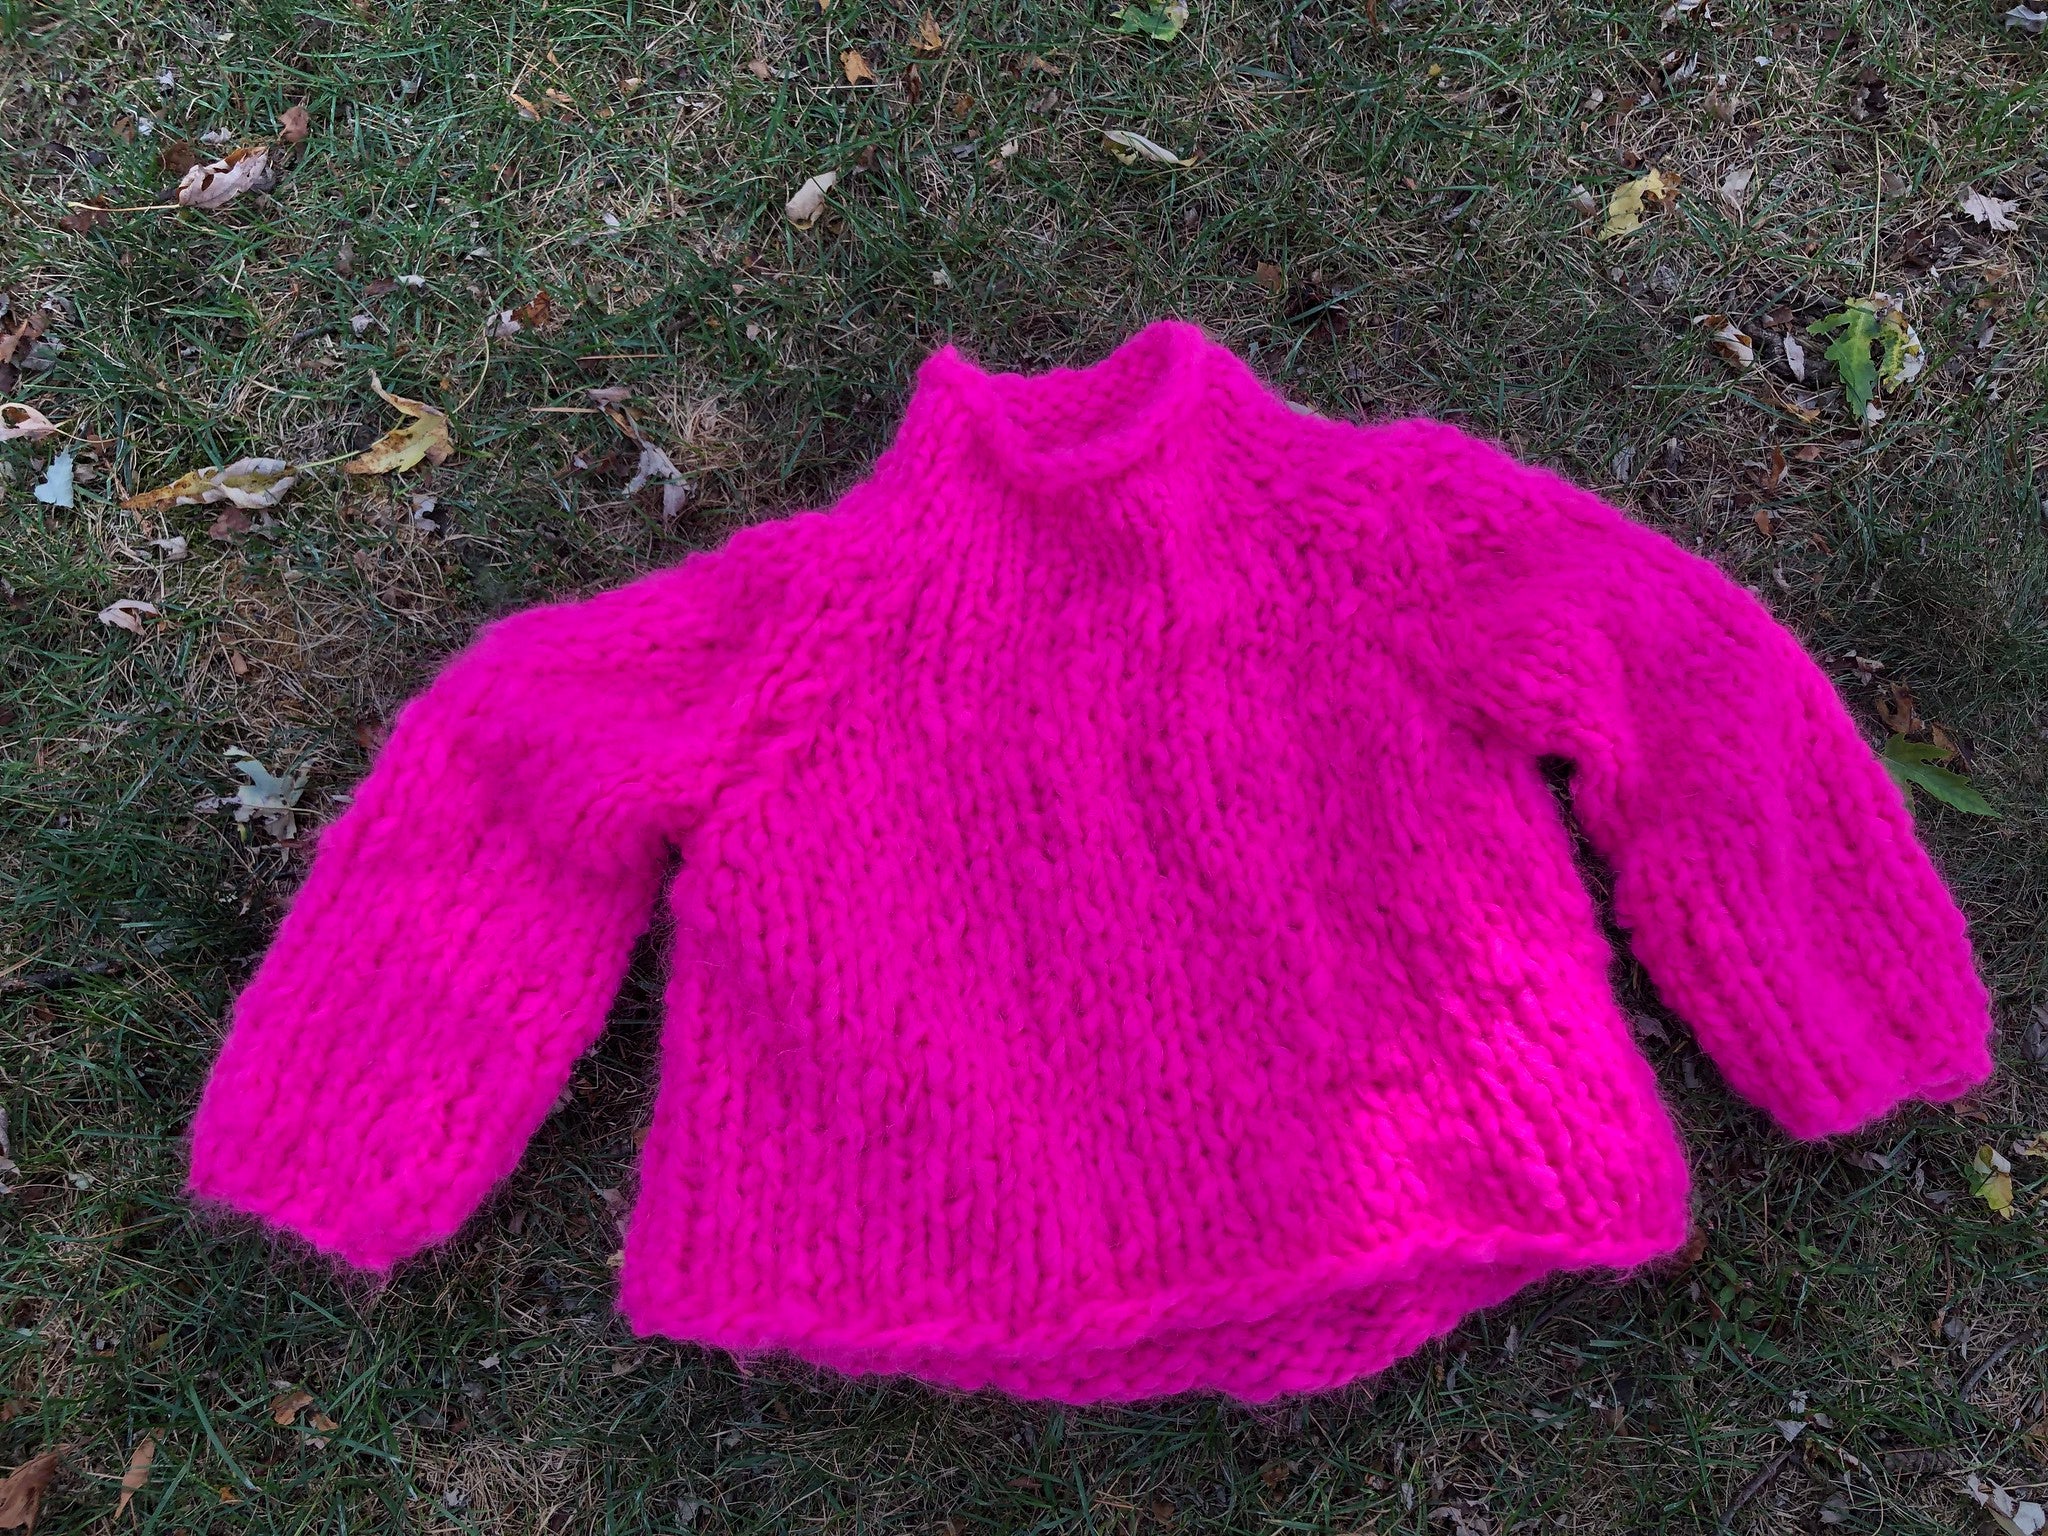 SALE - 30% - 50% OFF ORIGINAL PRICE - DIY Kit - Fluffy Sweater - Fluffy Alpaca